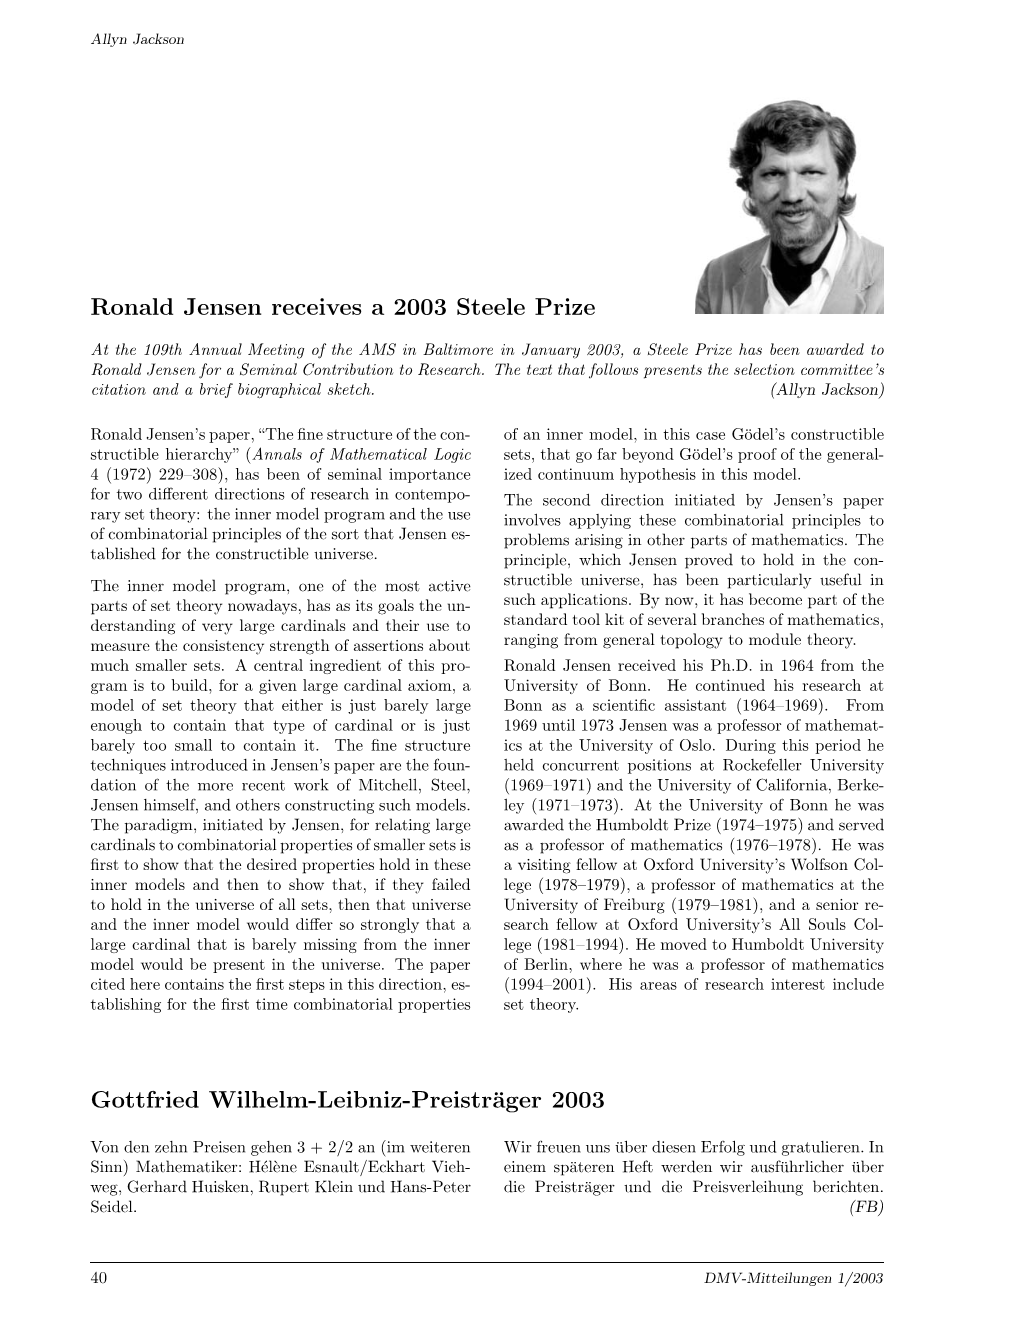 Ronald Jensen Receives a 2003 Steele Prize Gottfried Wilhelm-Leibniz-Preisträger 2003